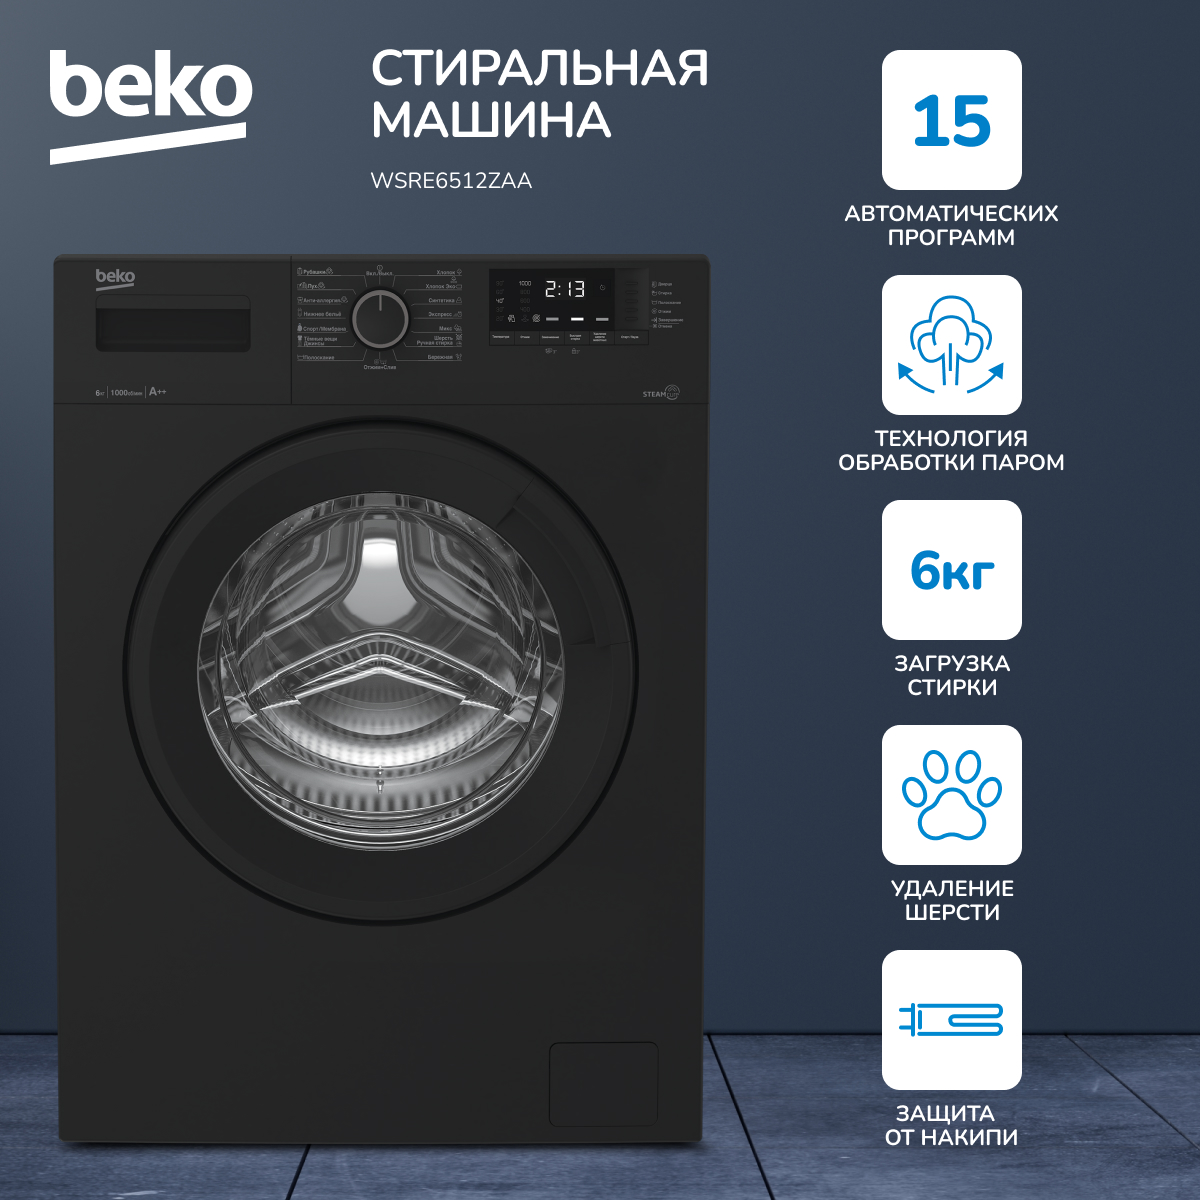 Стиральная машина Beko WSRE6512ZAA черный стиральная машина beko wsre6512zaa 6 кг